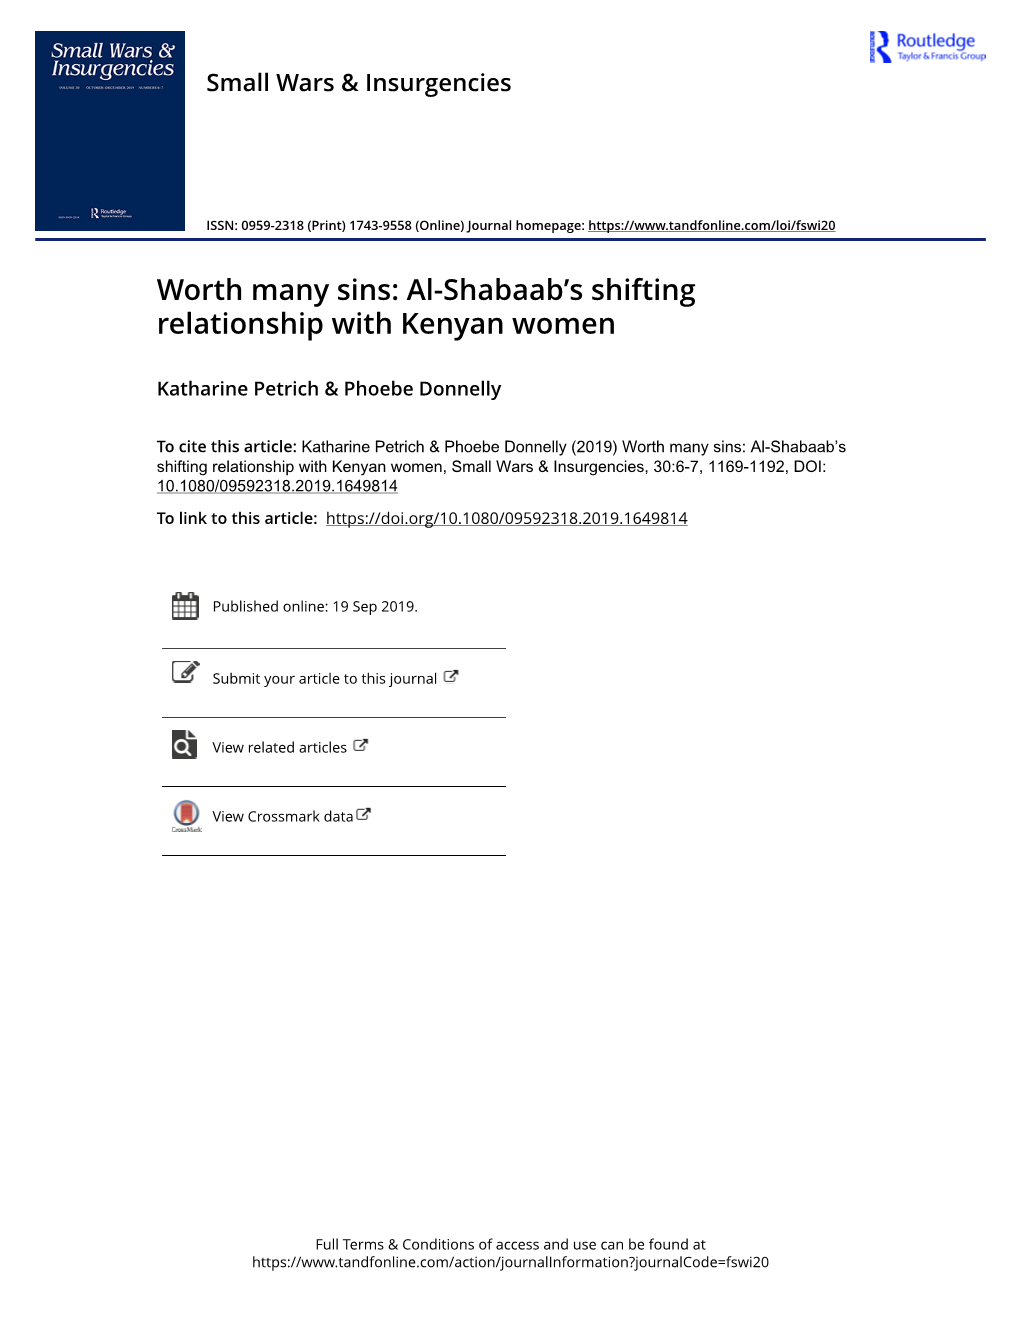 Al-Shabaab's Shifting Relationship with Kenyan Women